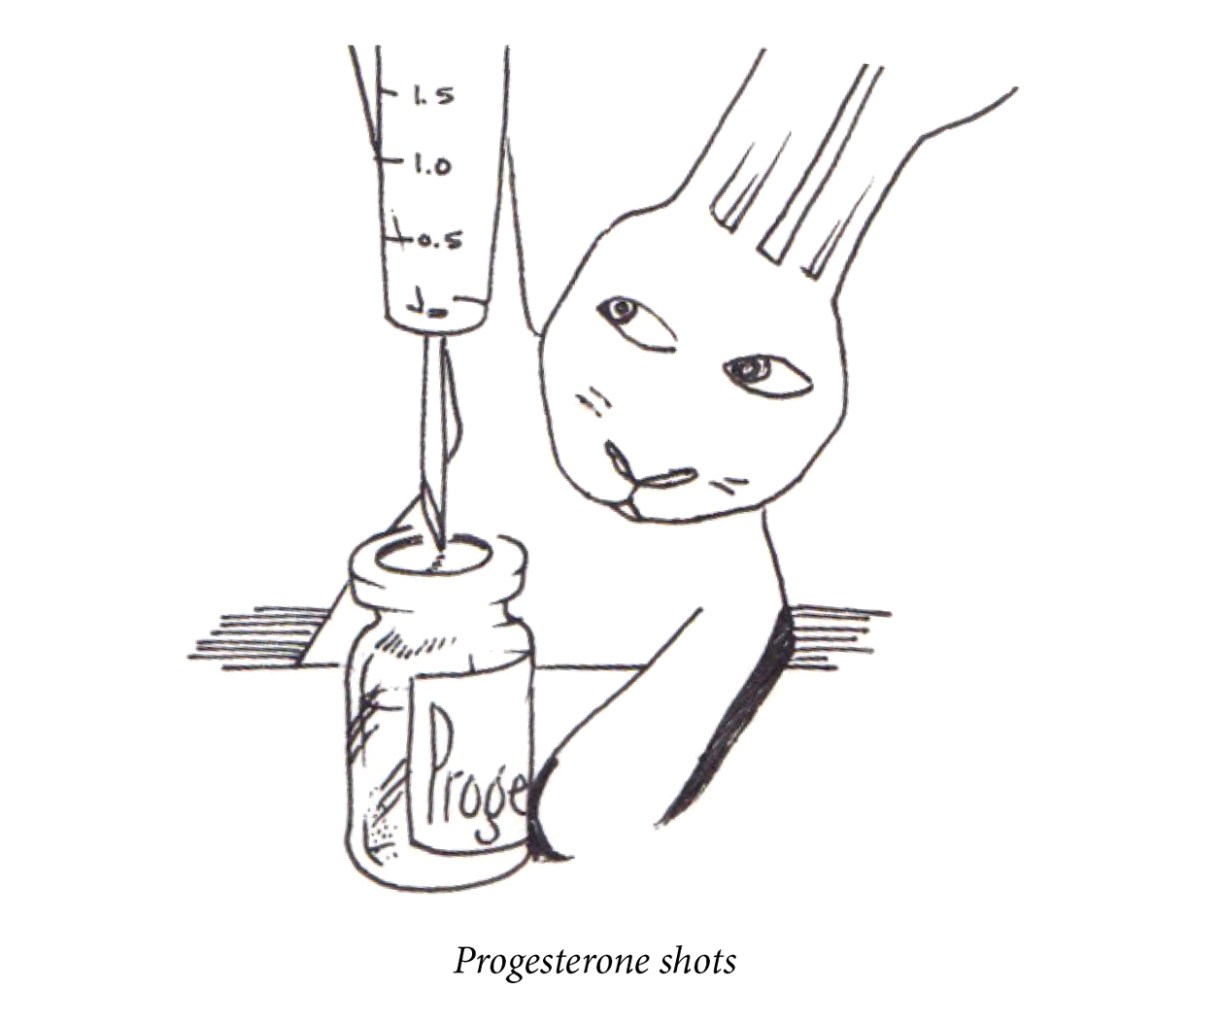 Image description: A rabbit prepared a shot of progesterone. Caption: “Progesterone shots.”